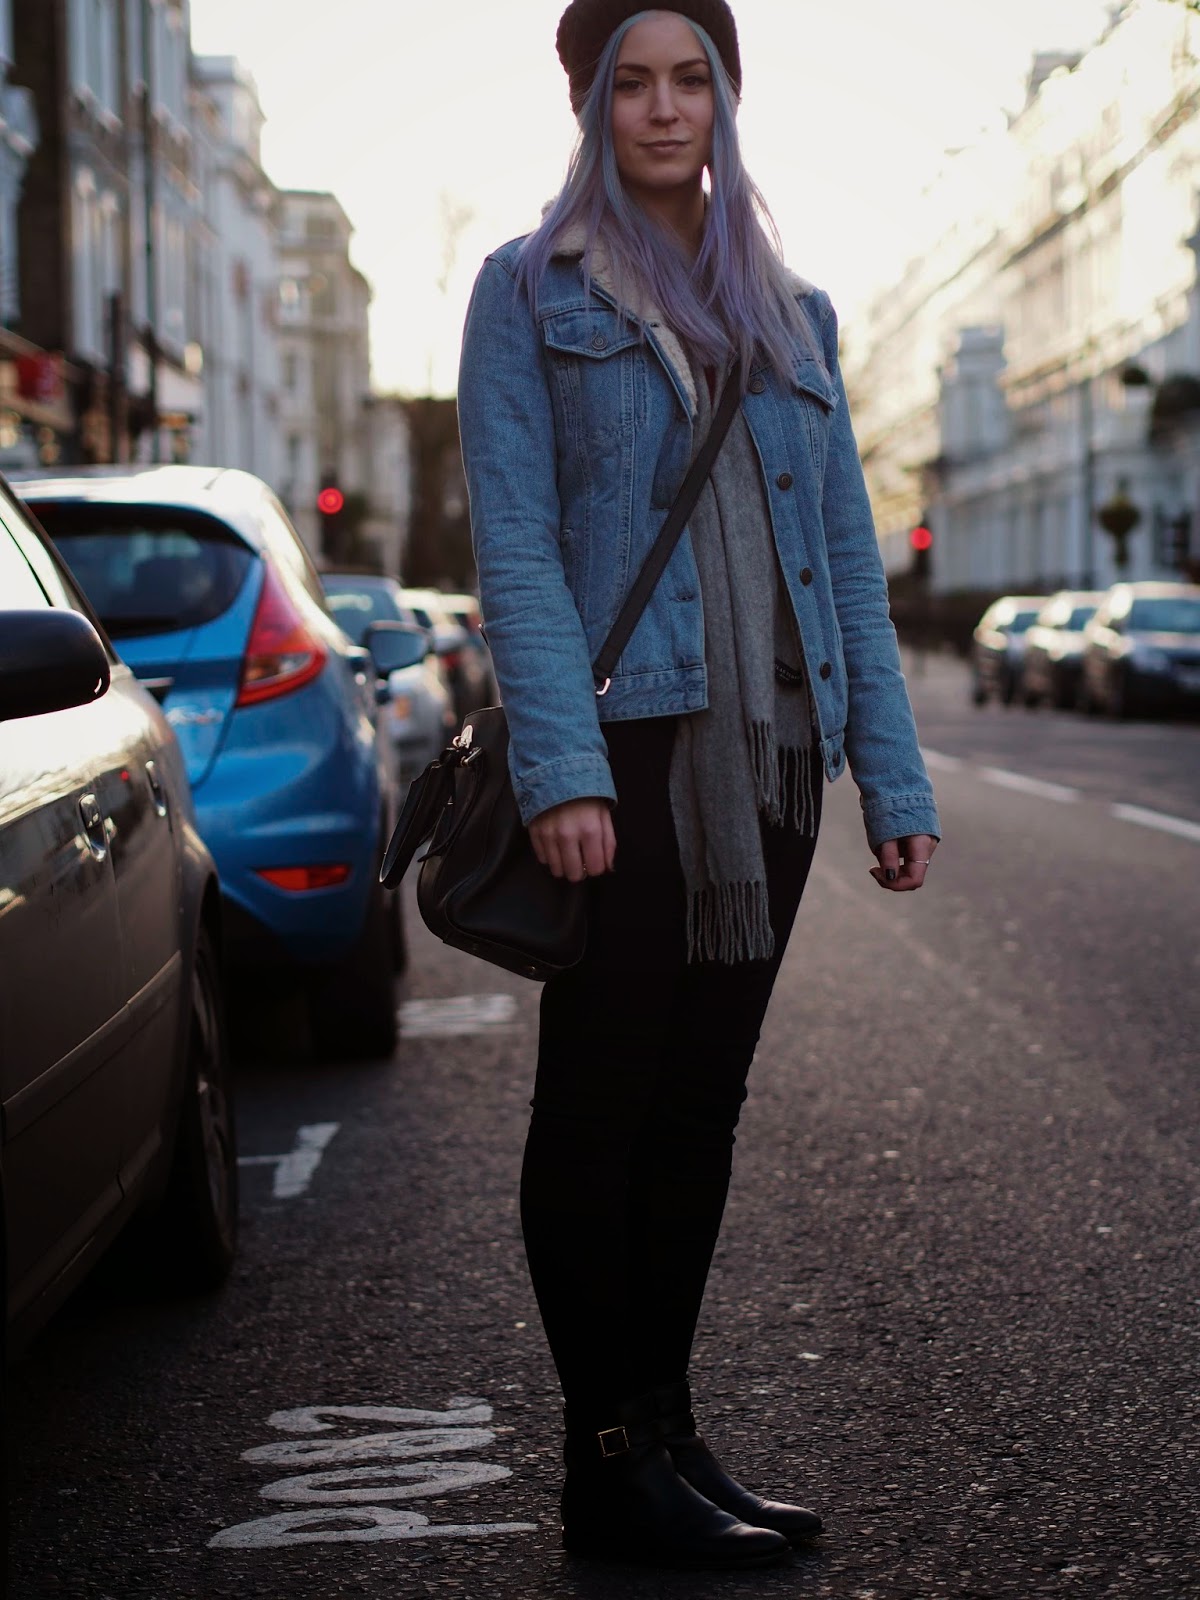 London Fashion by Paul: Street Muses...Gemma Styles